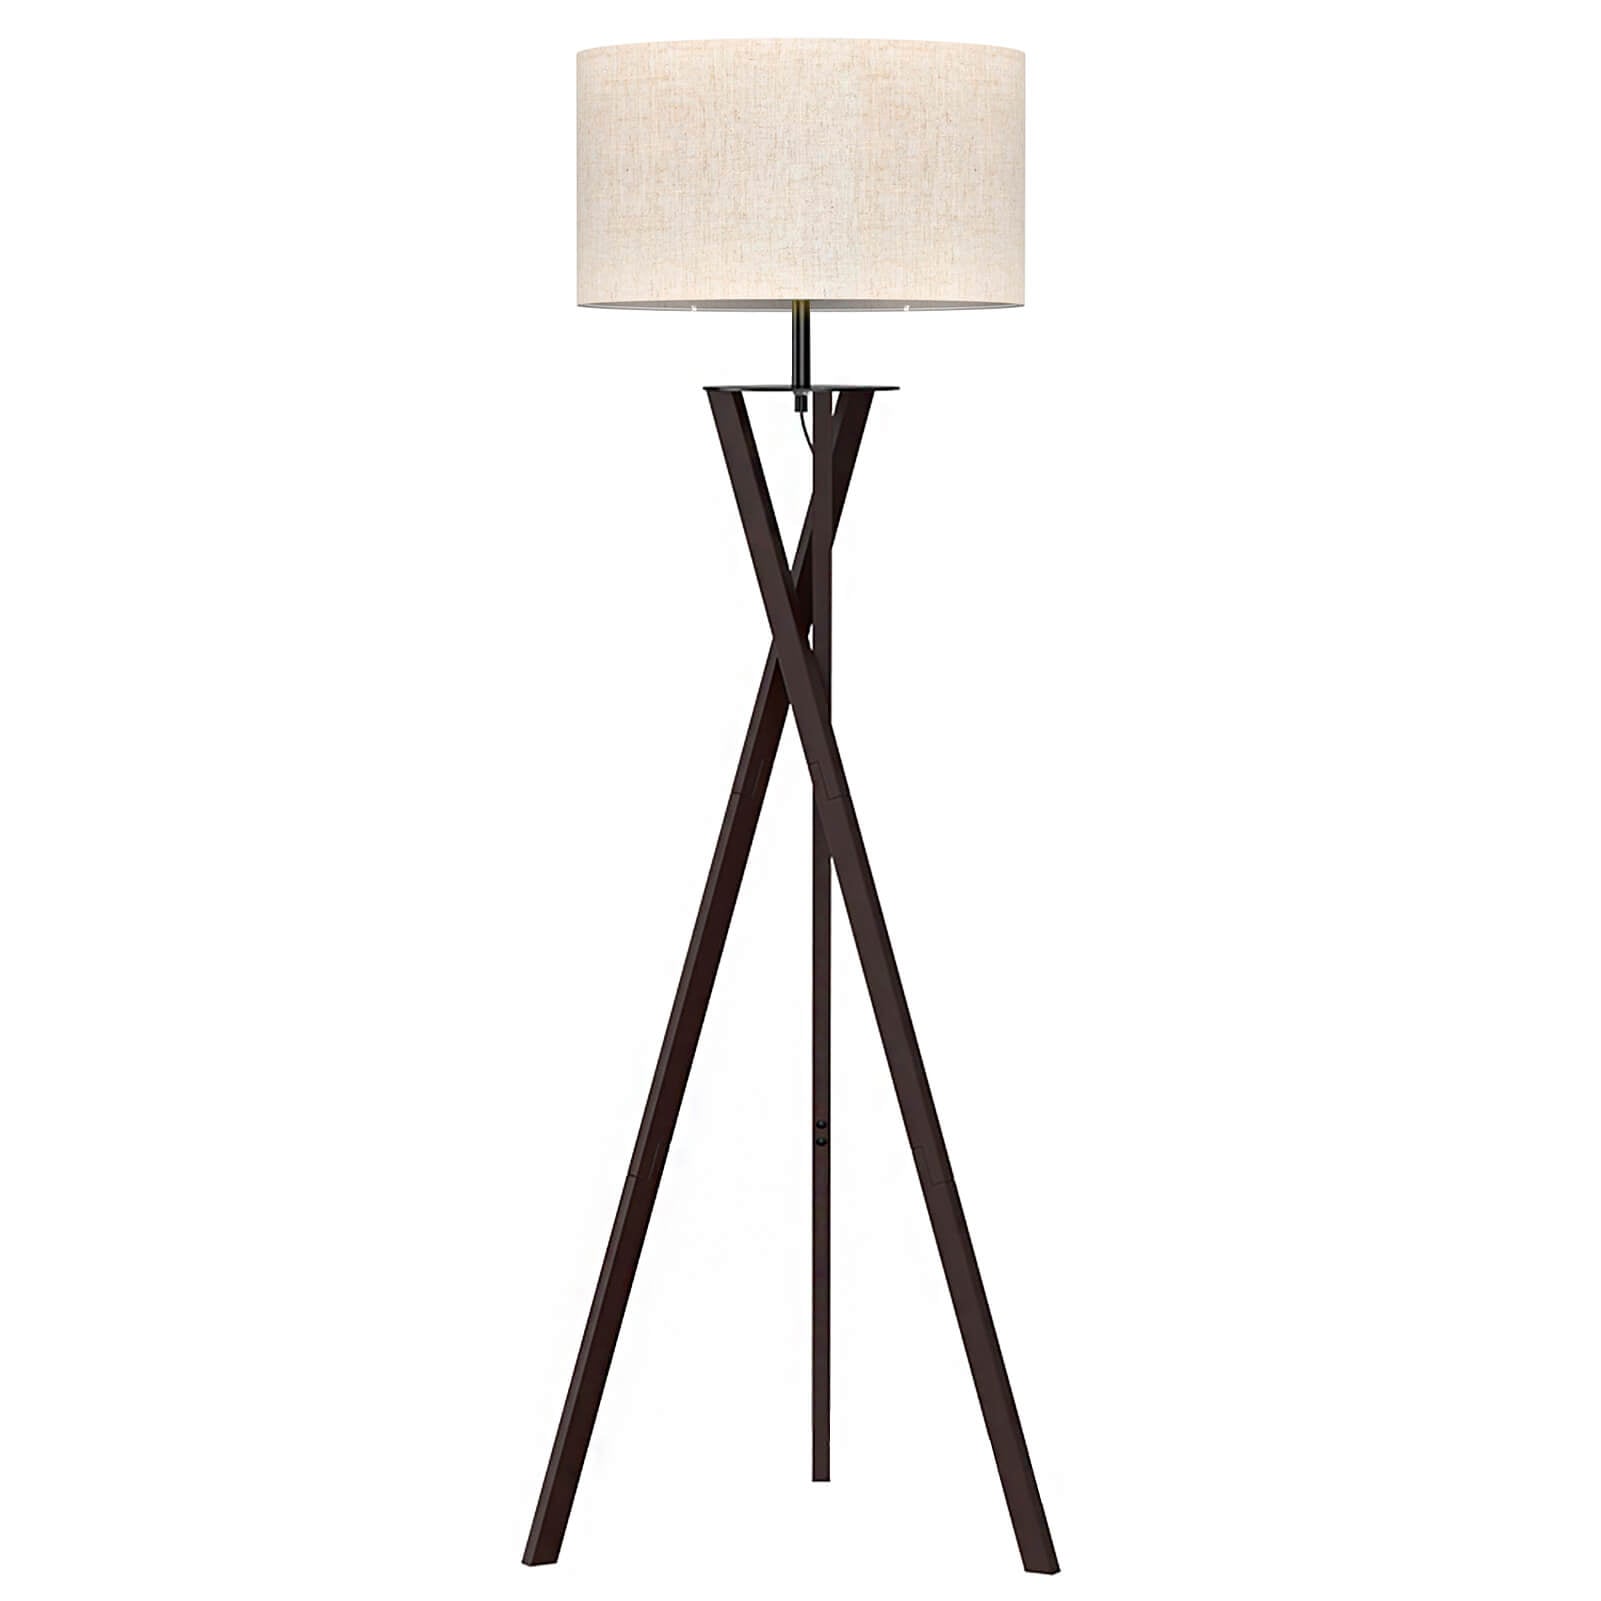 Wooden Tripod Floor Lamp, Standing Lamp for Living Room